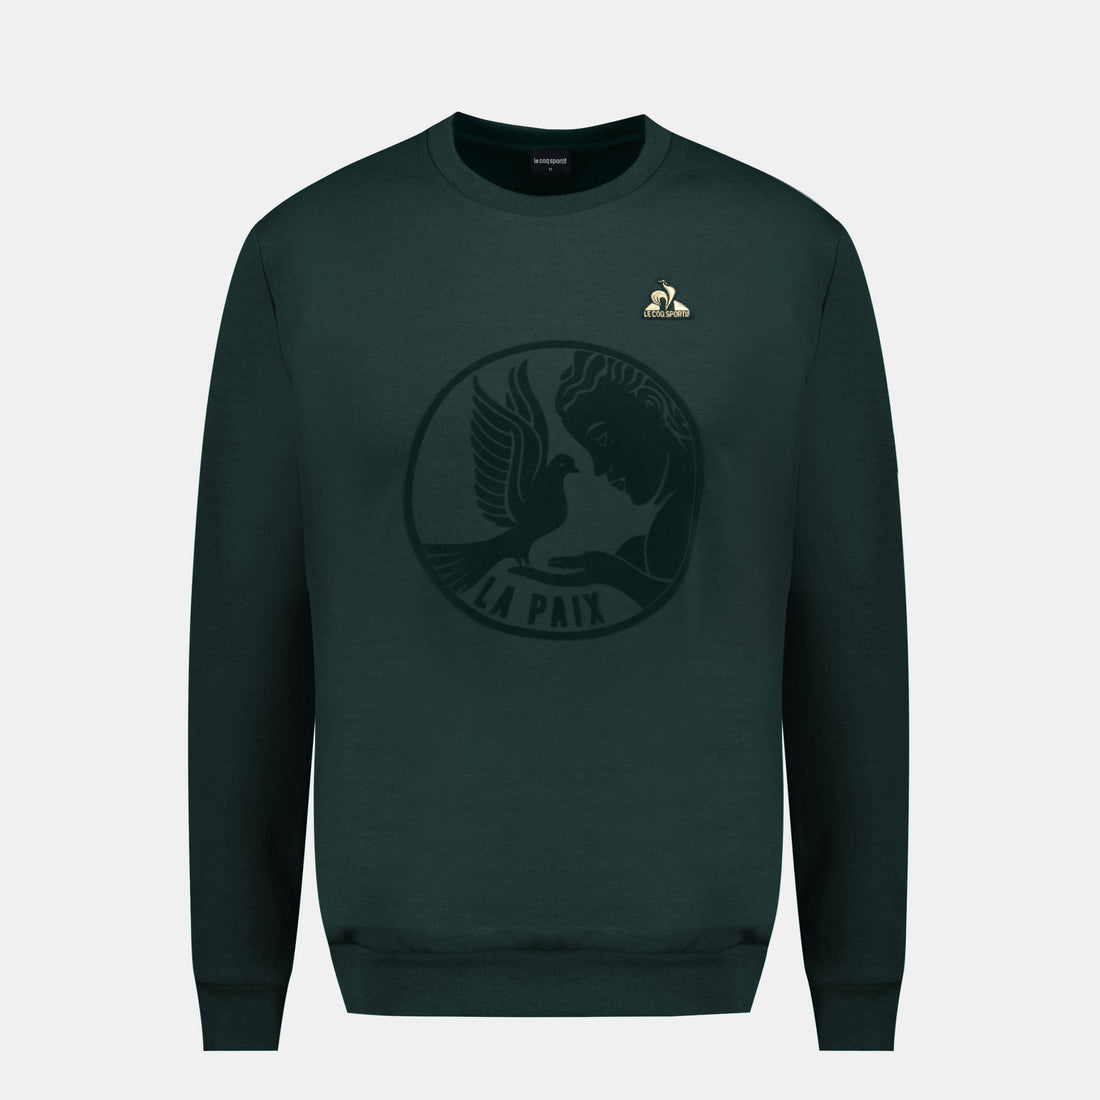 2411179-LA PAIX Crew Sweat N°1 M scarab  | Round-Neck Sweatshirtshirt motif «La Paix» for men